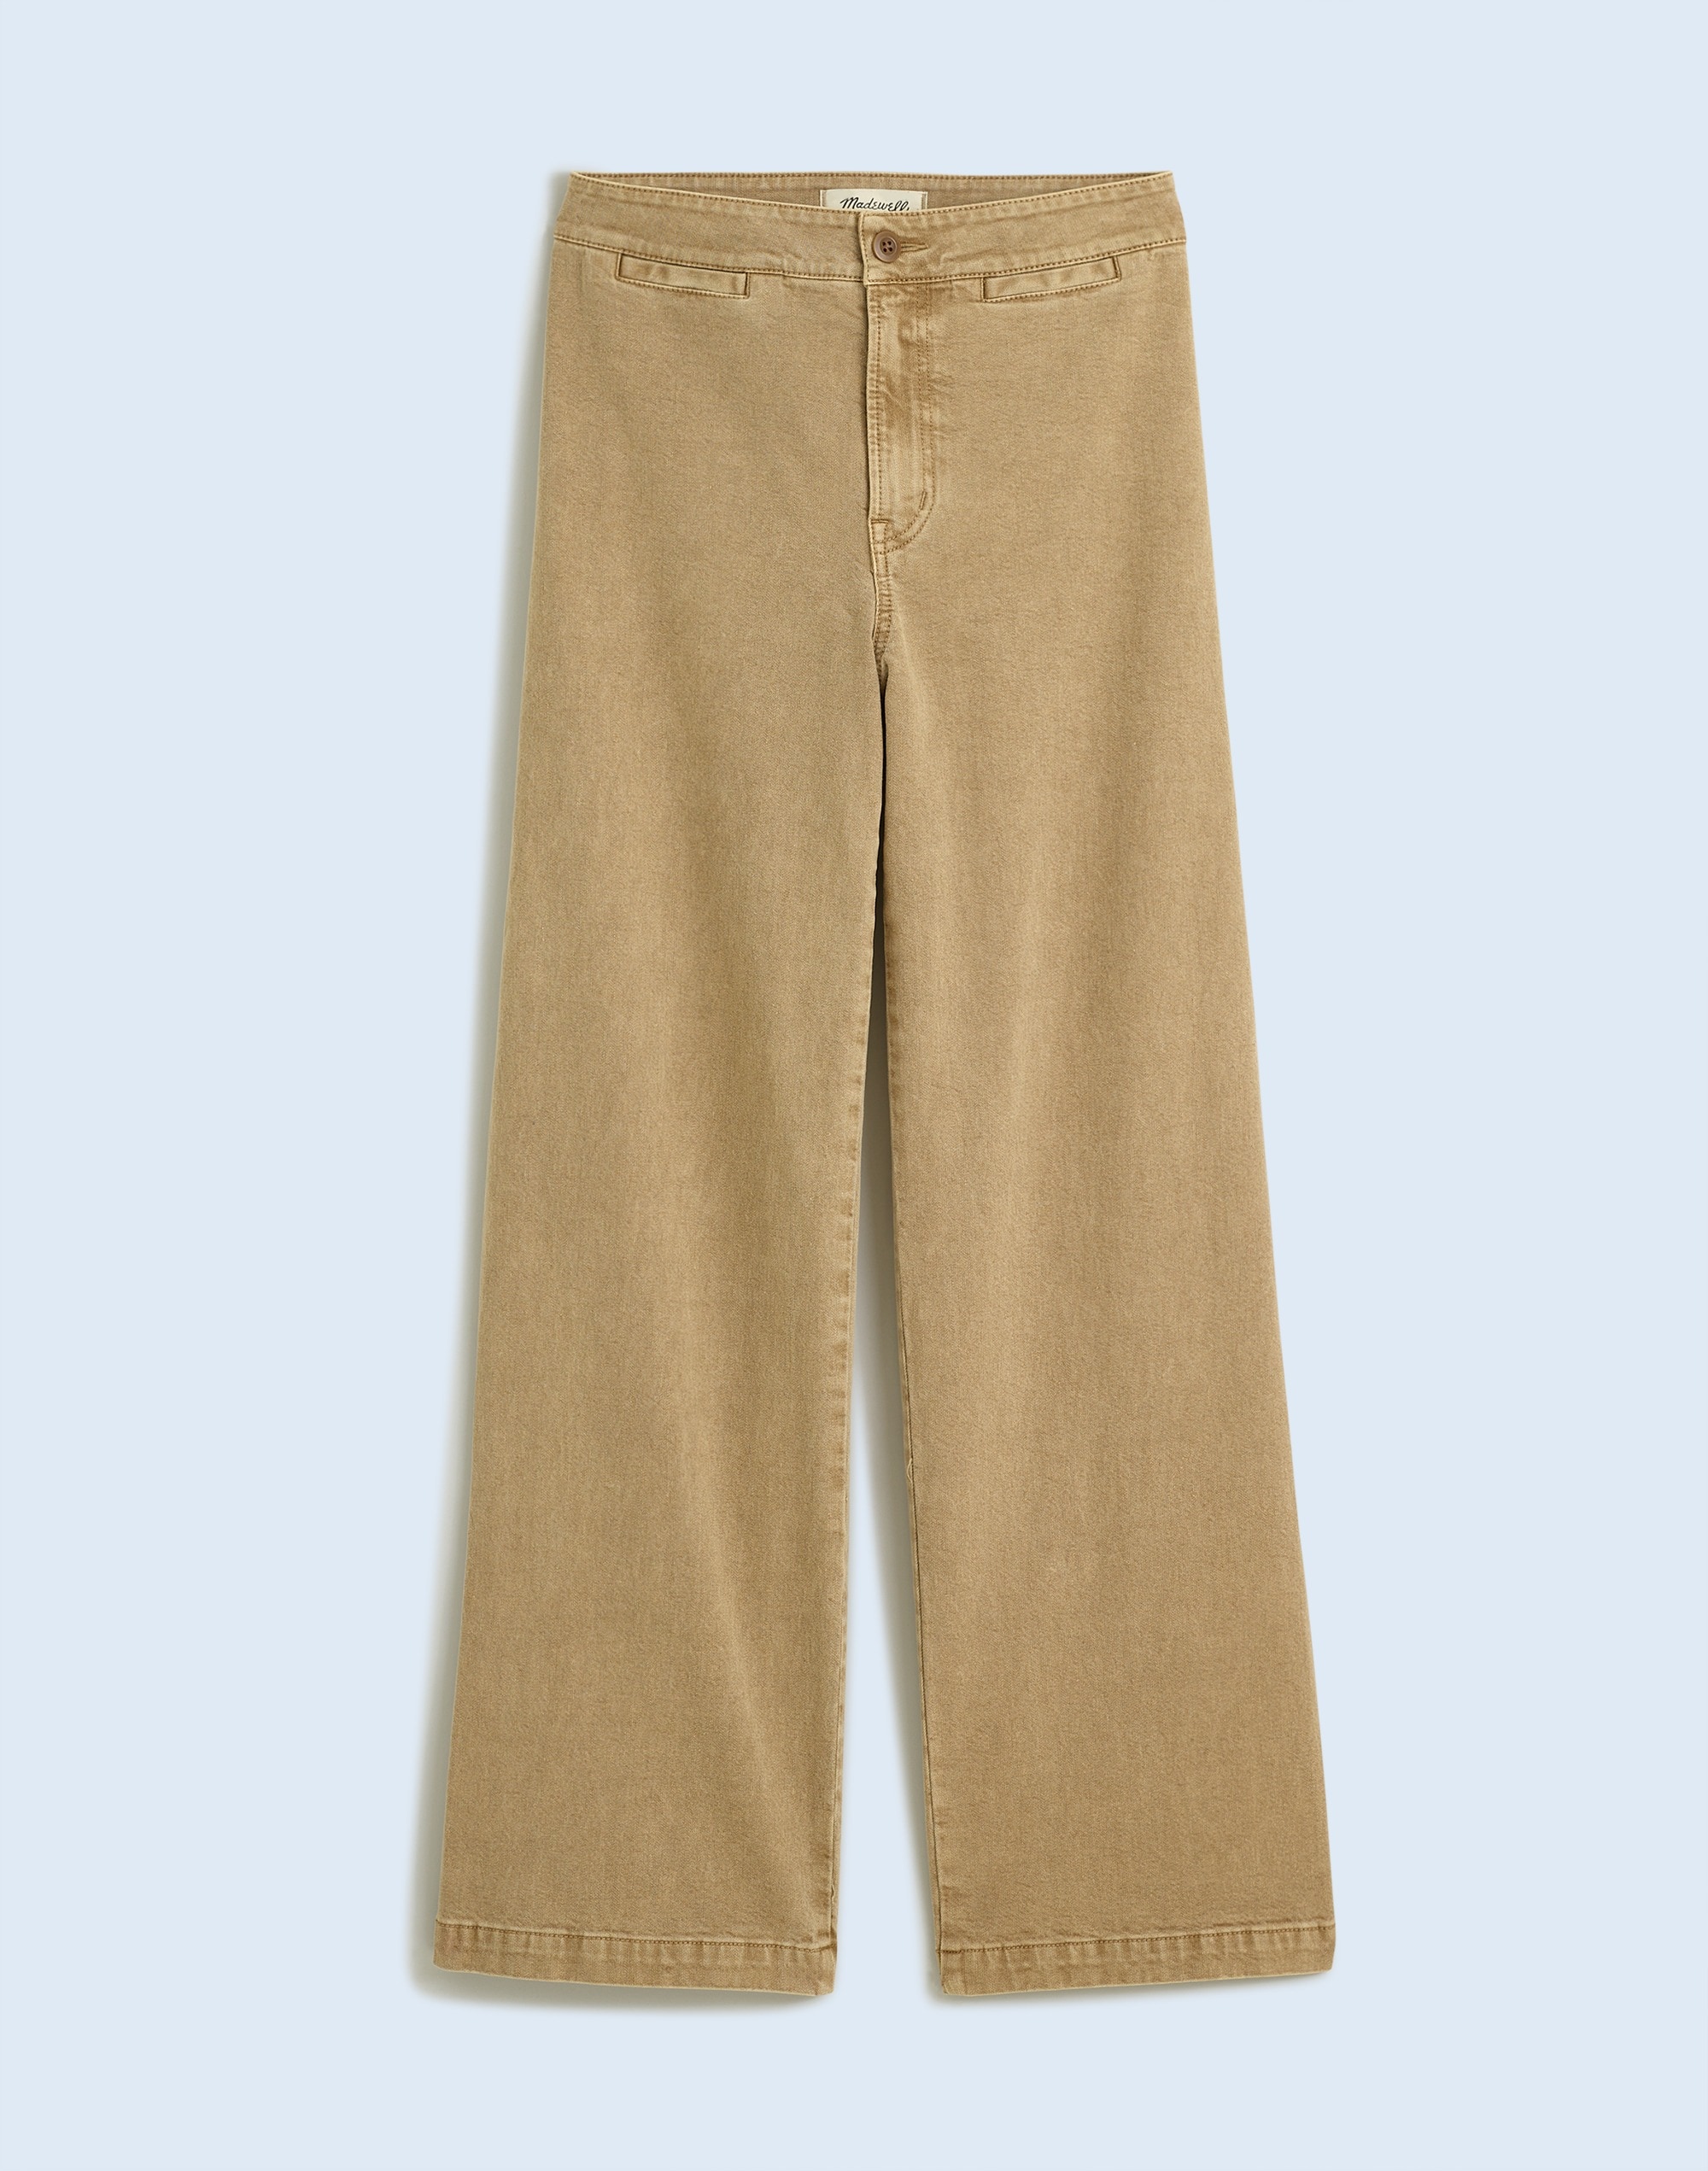 The Petite Curvy Emmett Wide-Leg Crop Pant in Garment Dye: Welt Pocket Edition